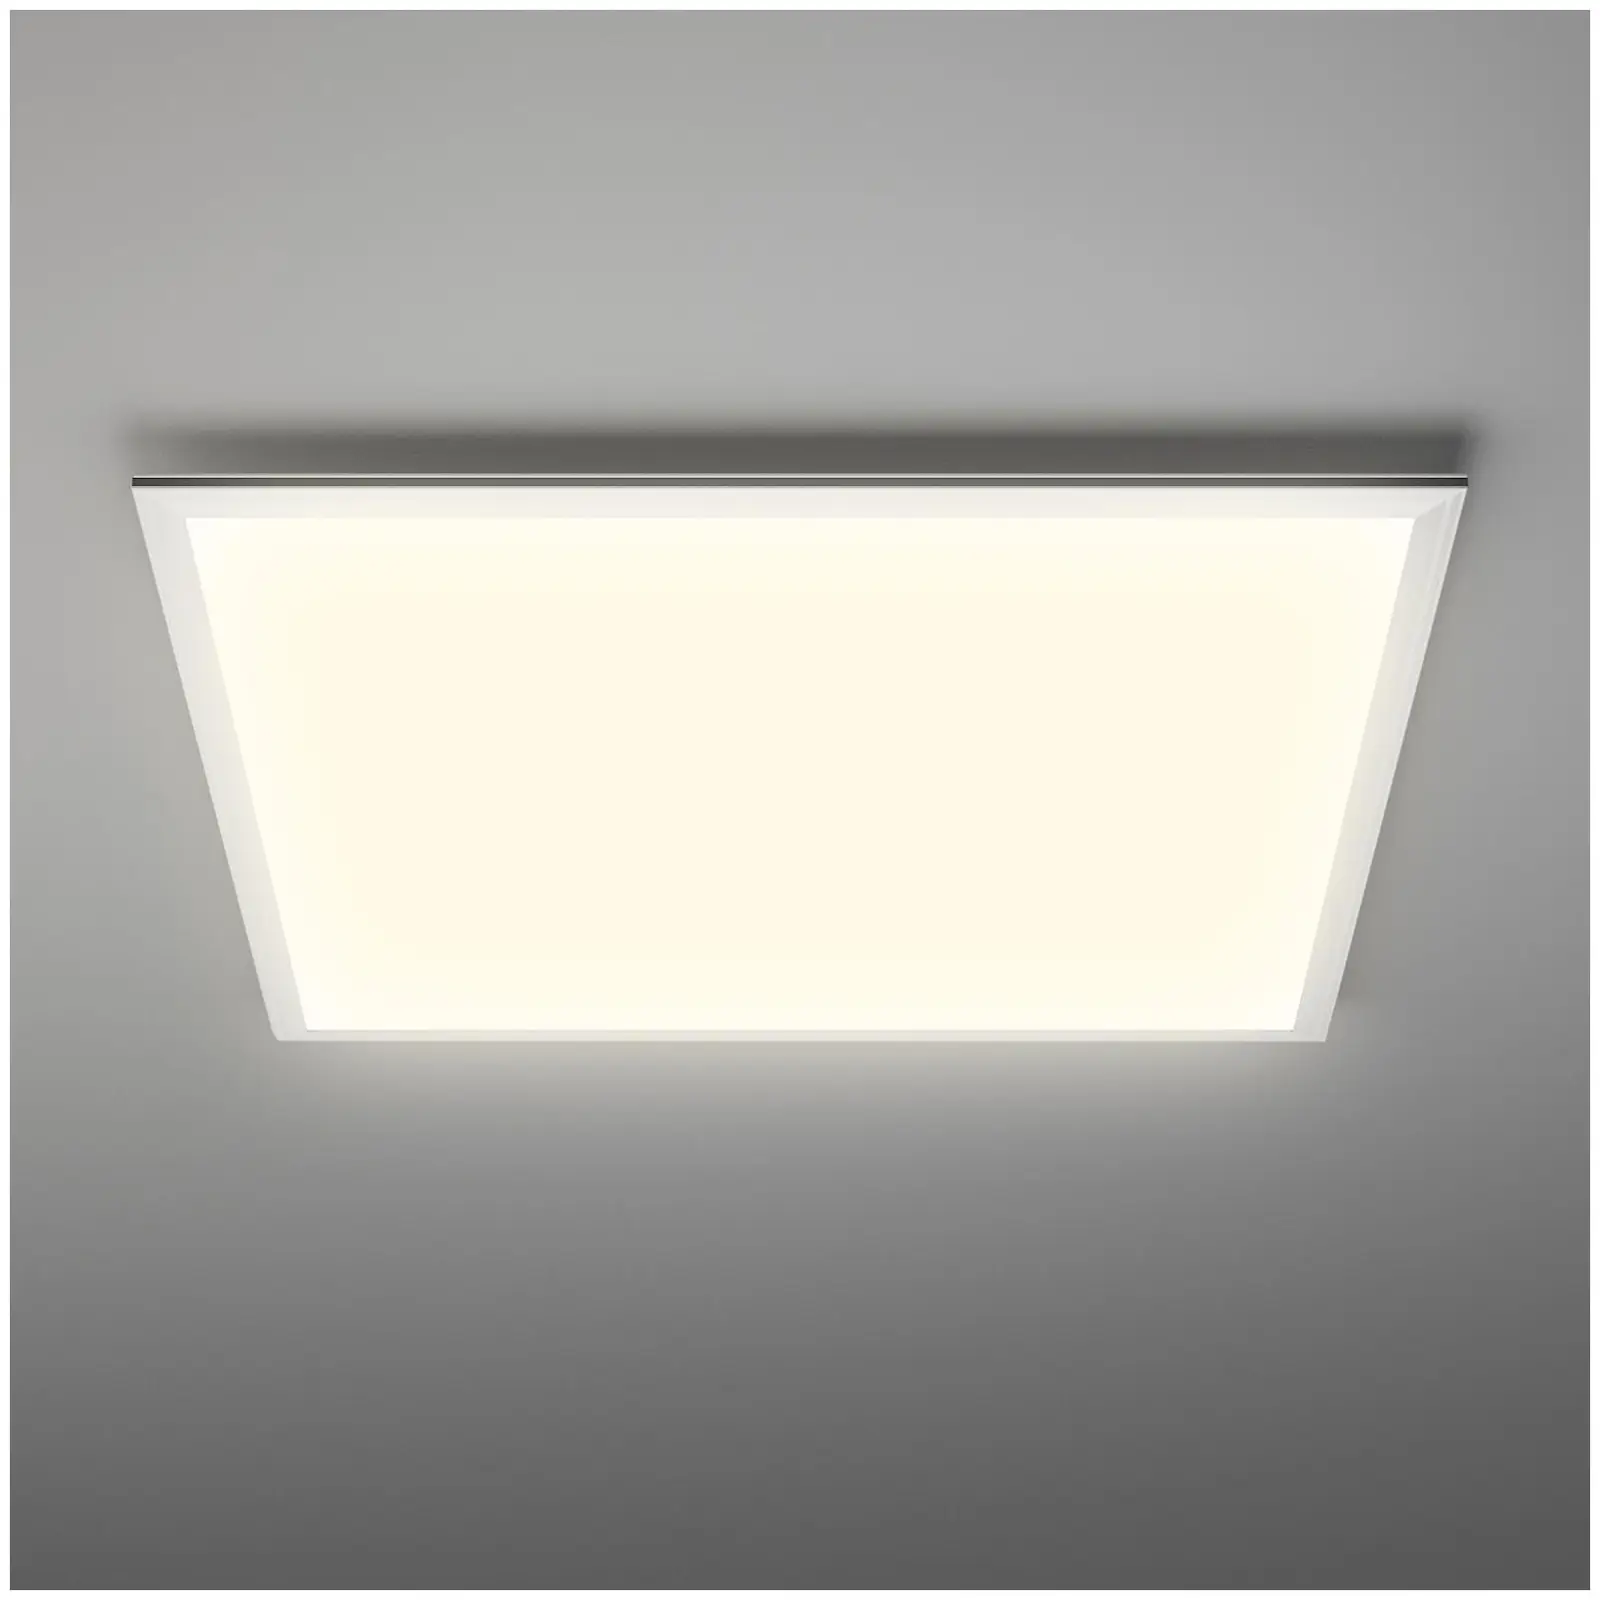 Indbygningslampe - 62 x 62 x 1 cm - 40 W - 3.800 lumen - 4.000 K (neutral hvid)